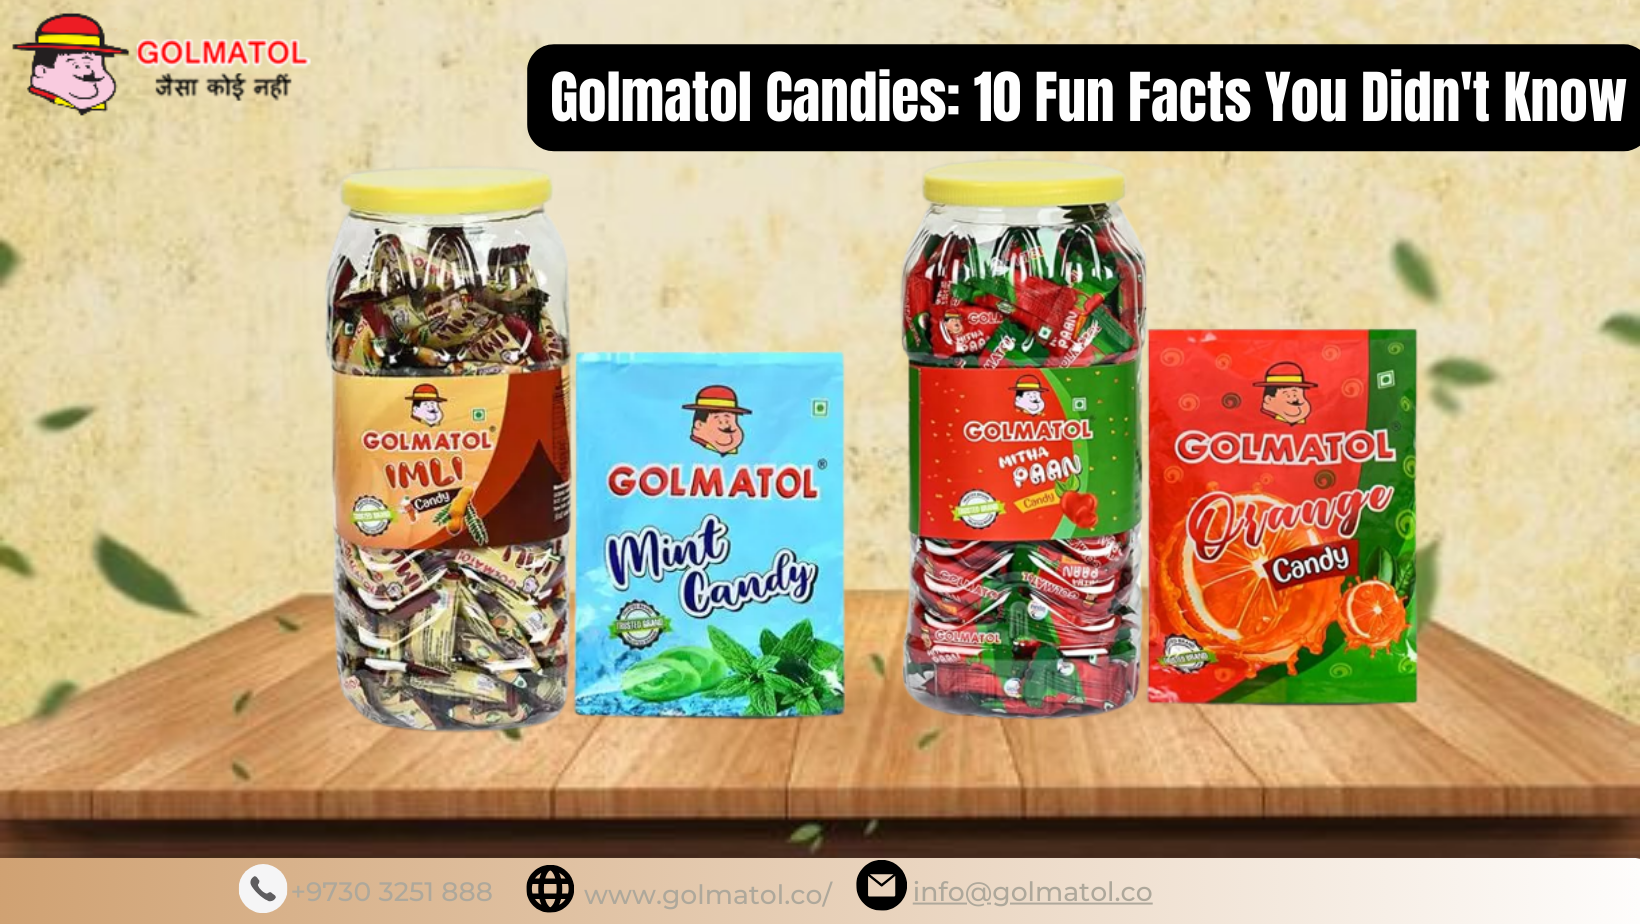 Golmatol Candies: 10 Fun Facts You Didn't Know